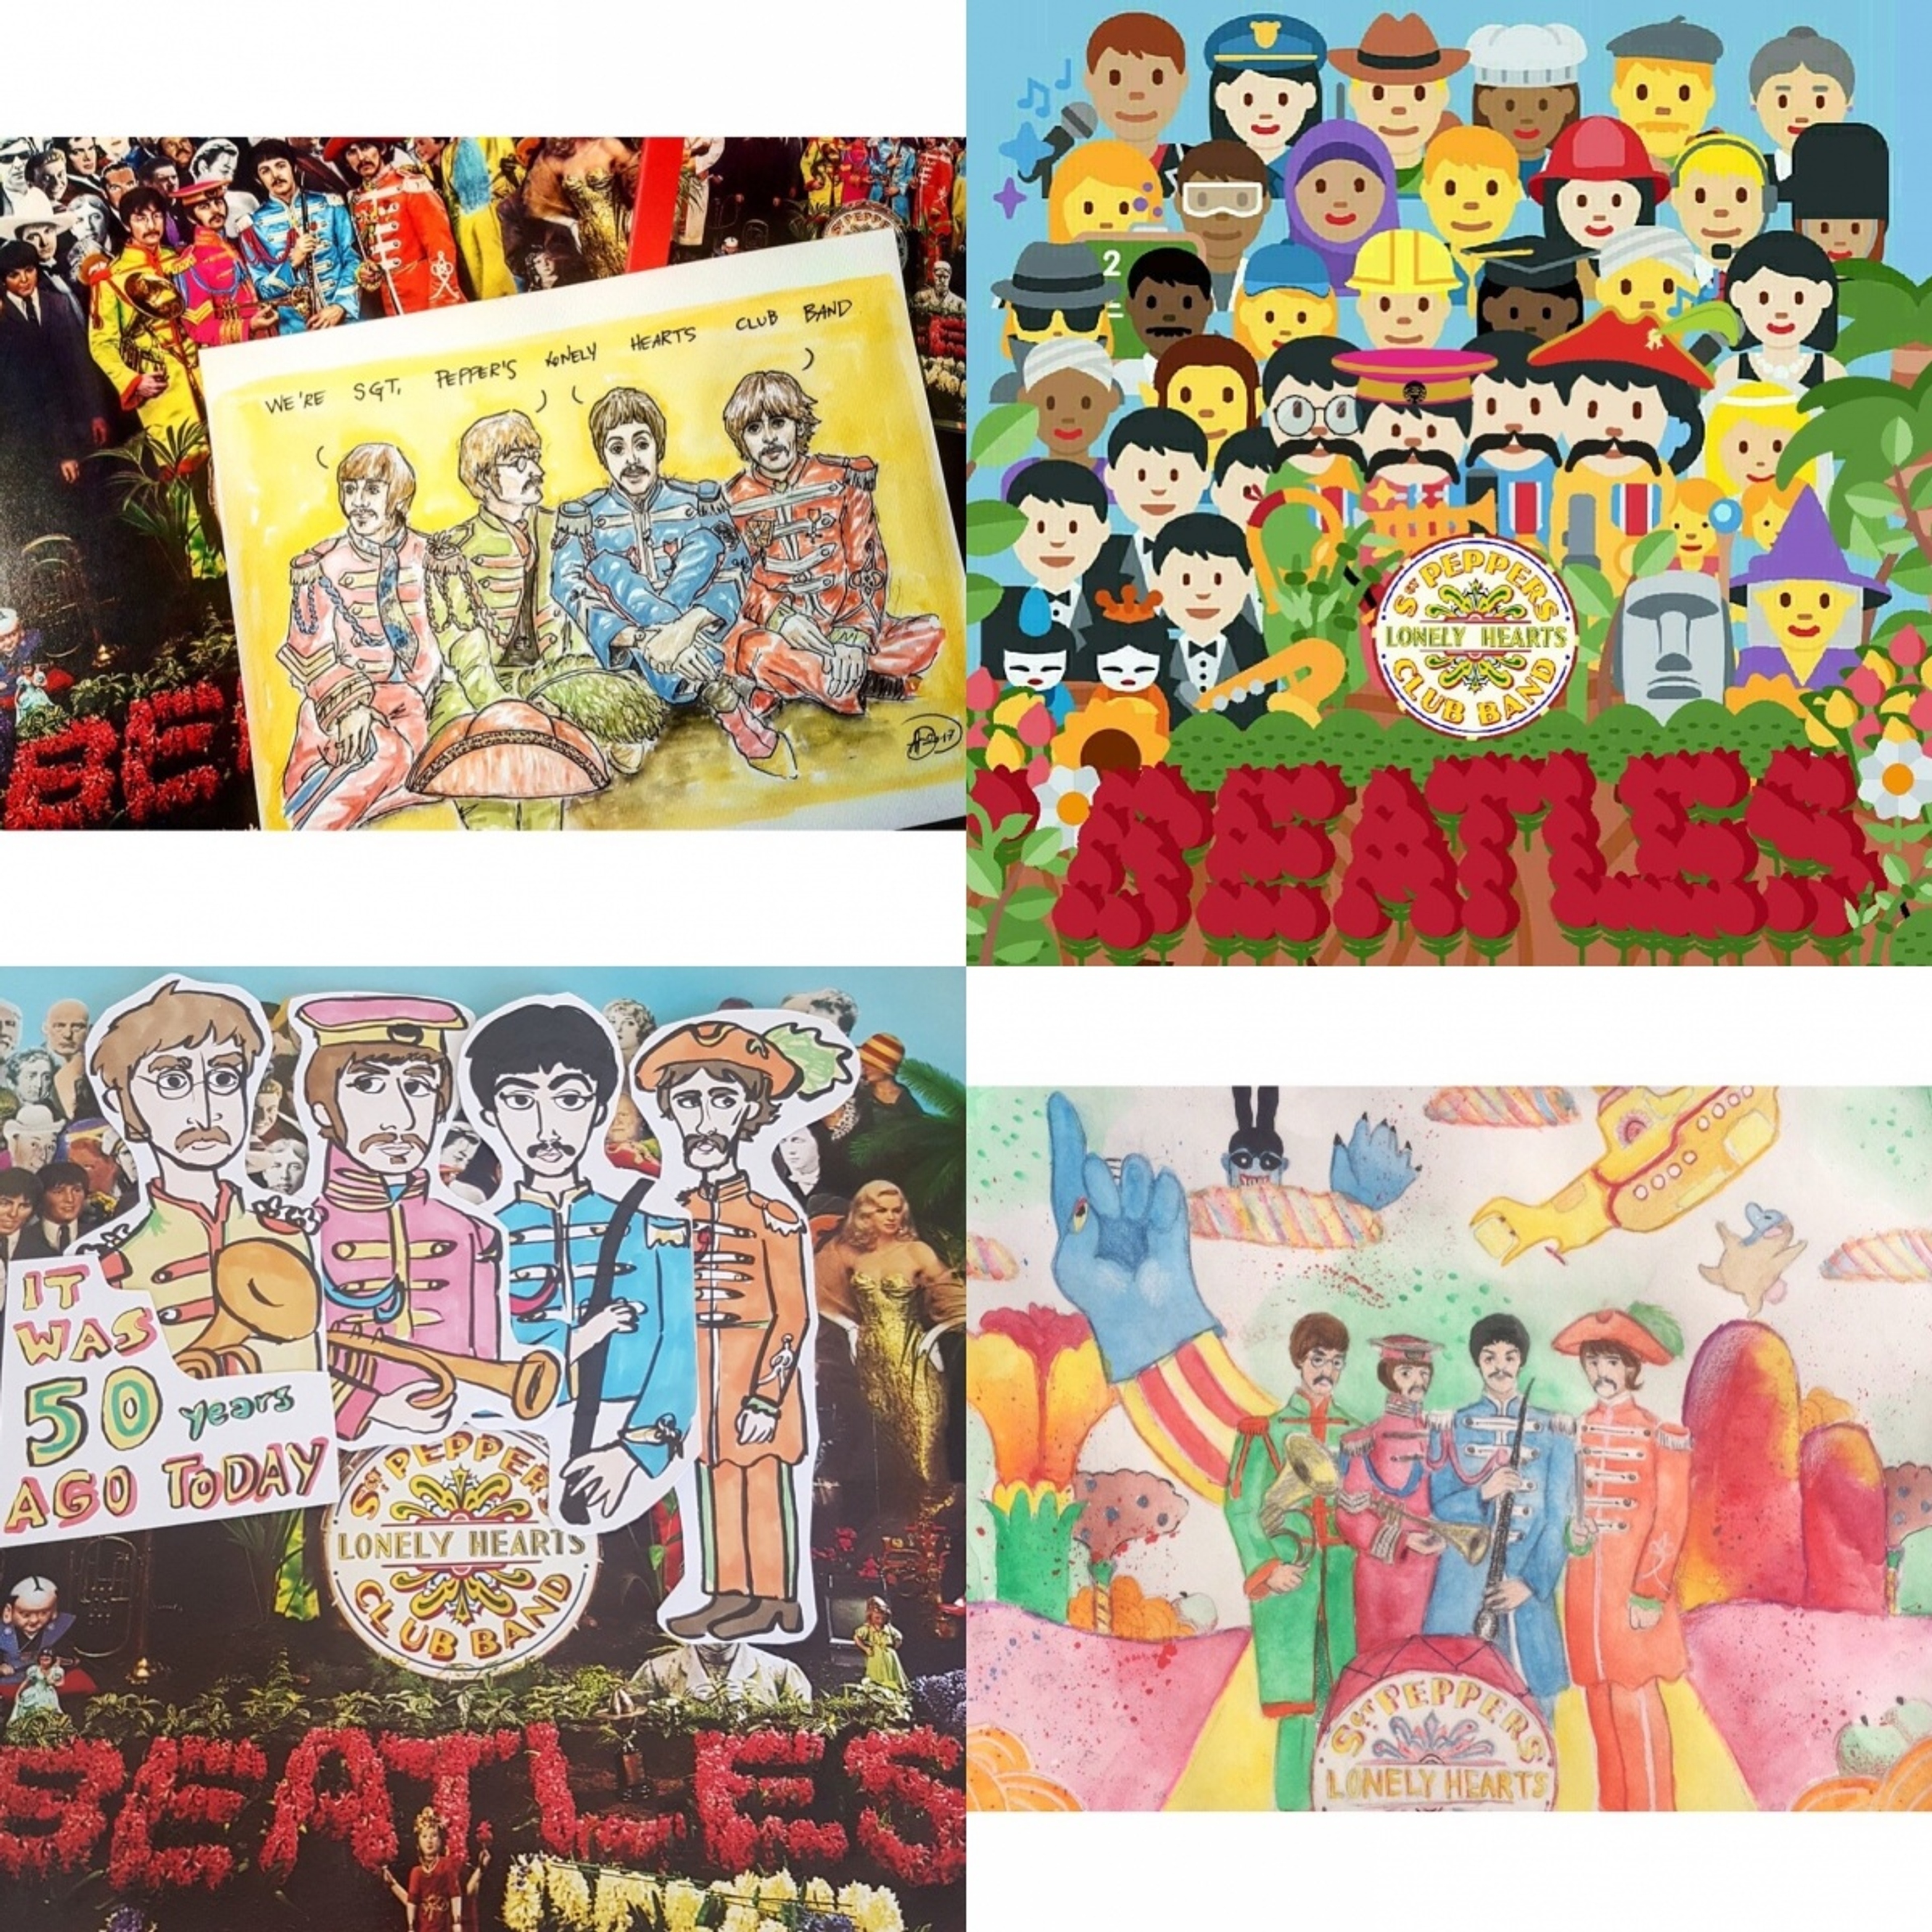 Sgt. Pepper fan art by Twitter users danialv_89, toolaberry, DamieJones, HLHCB!